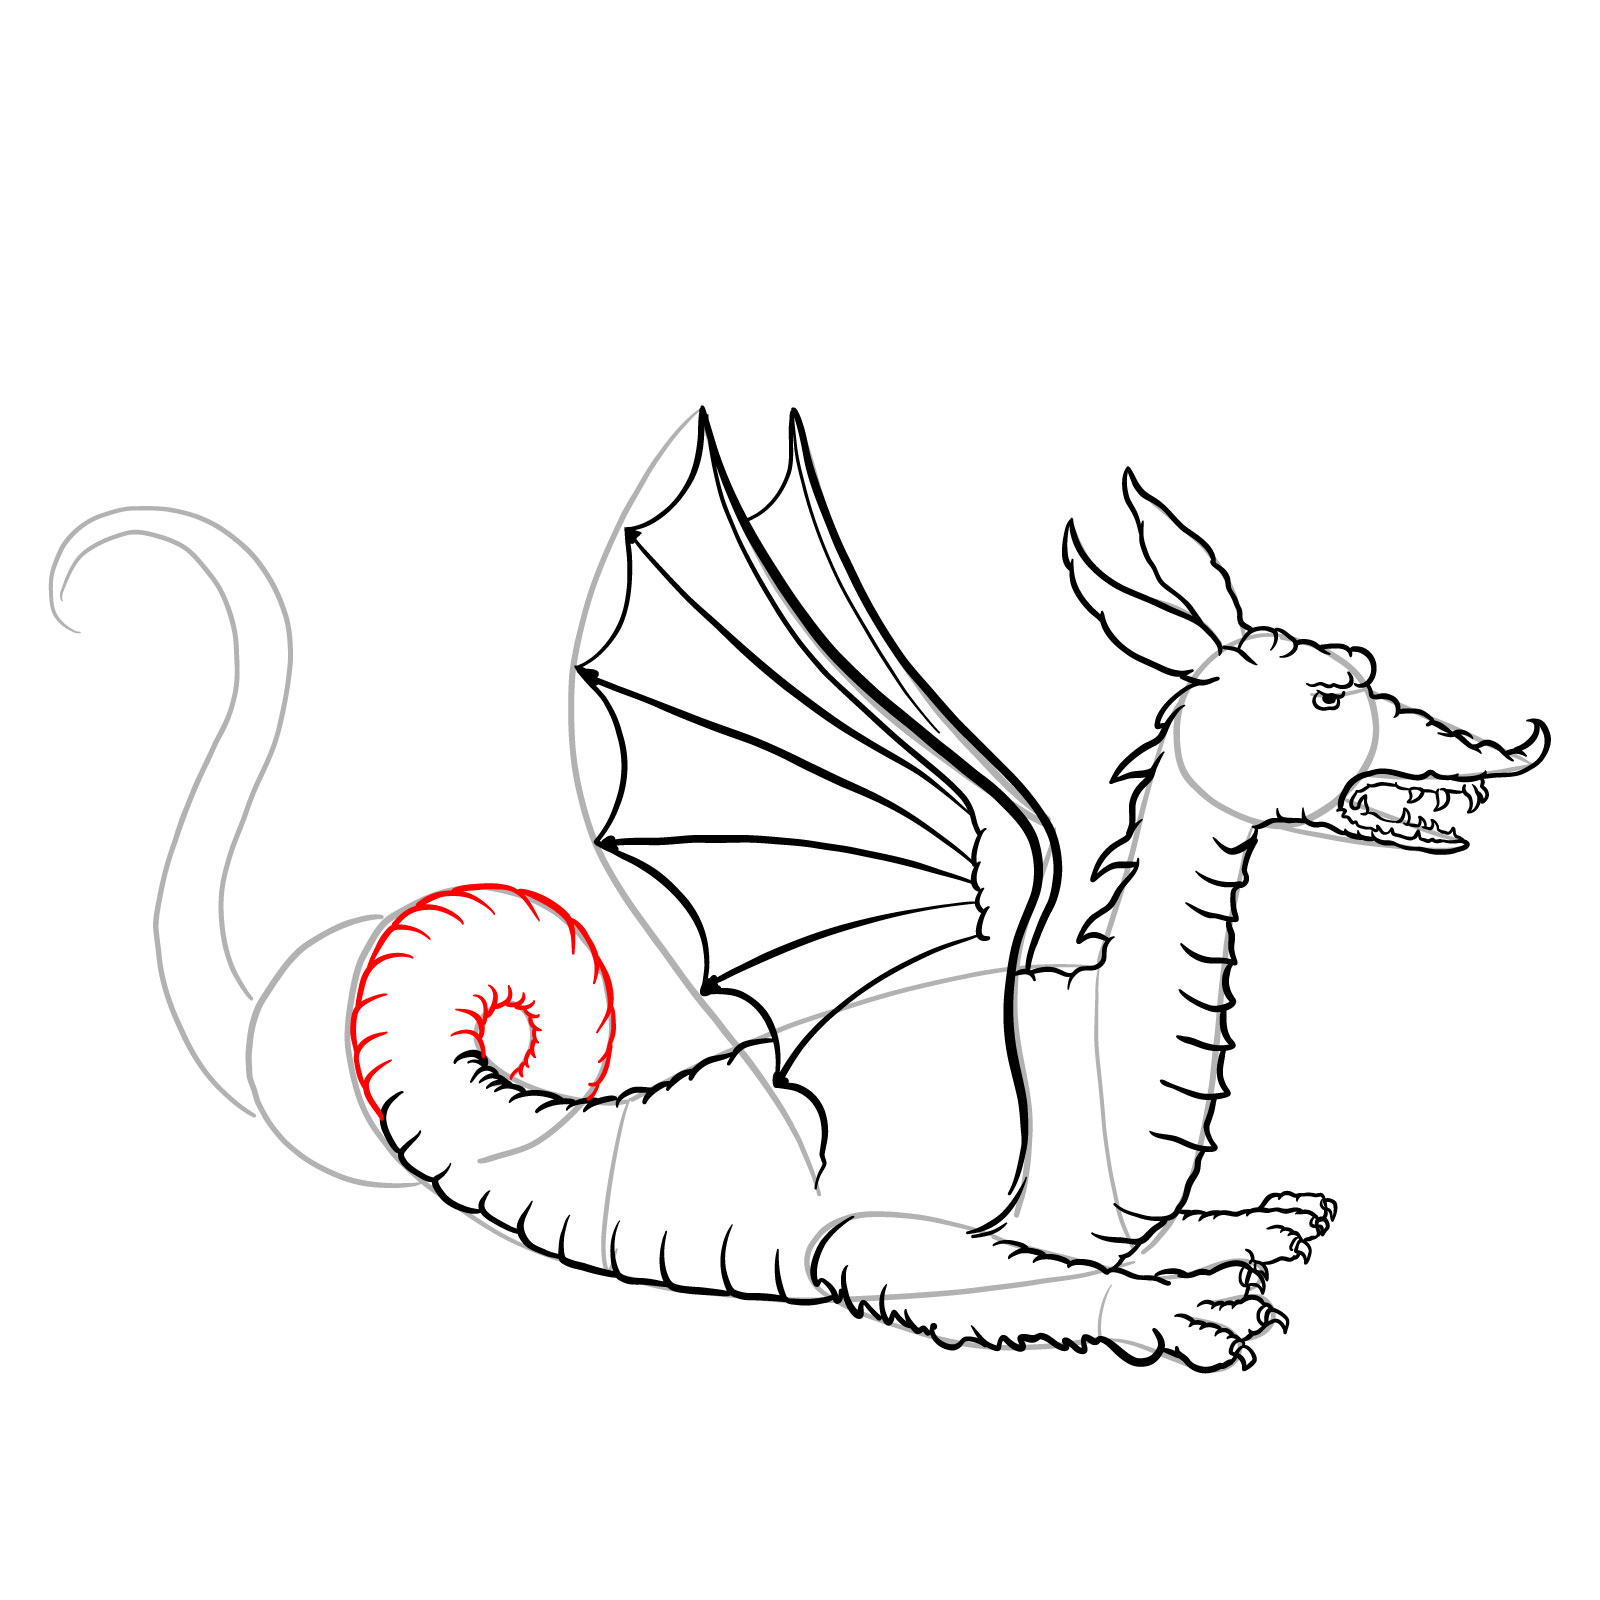 How to draw a Knucker dragon - step 27